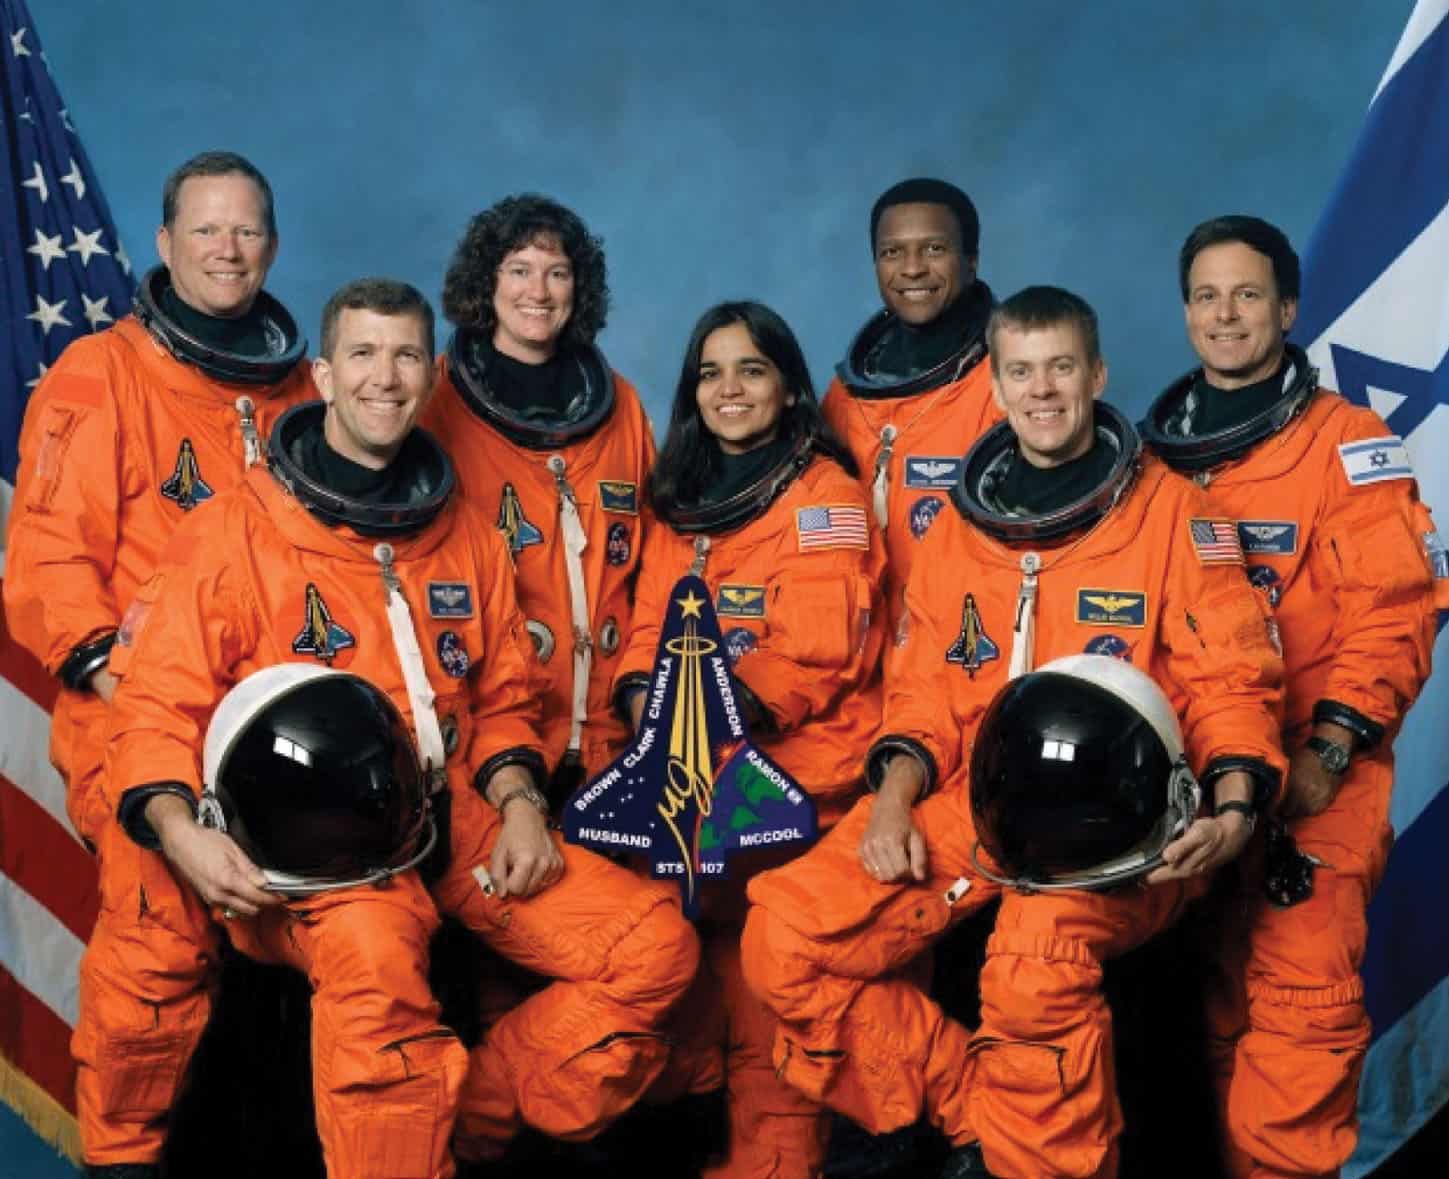 члены экипажа, космонавты, экипаж шаттла